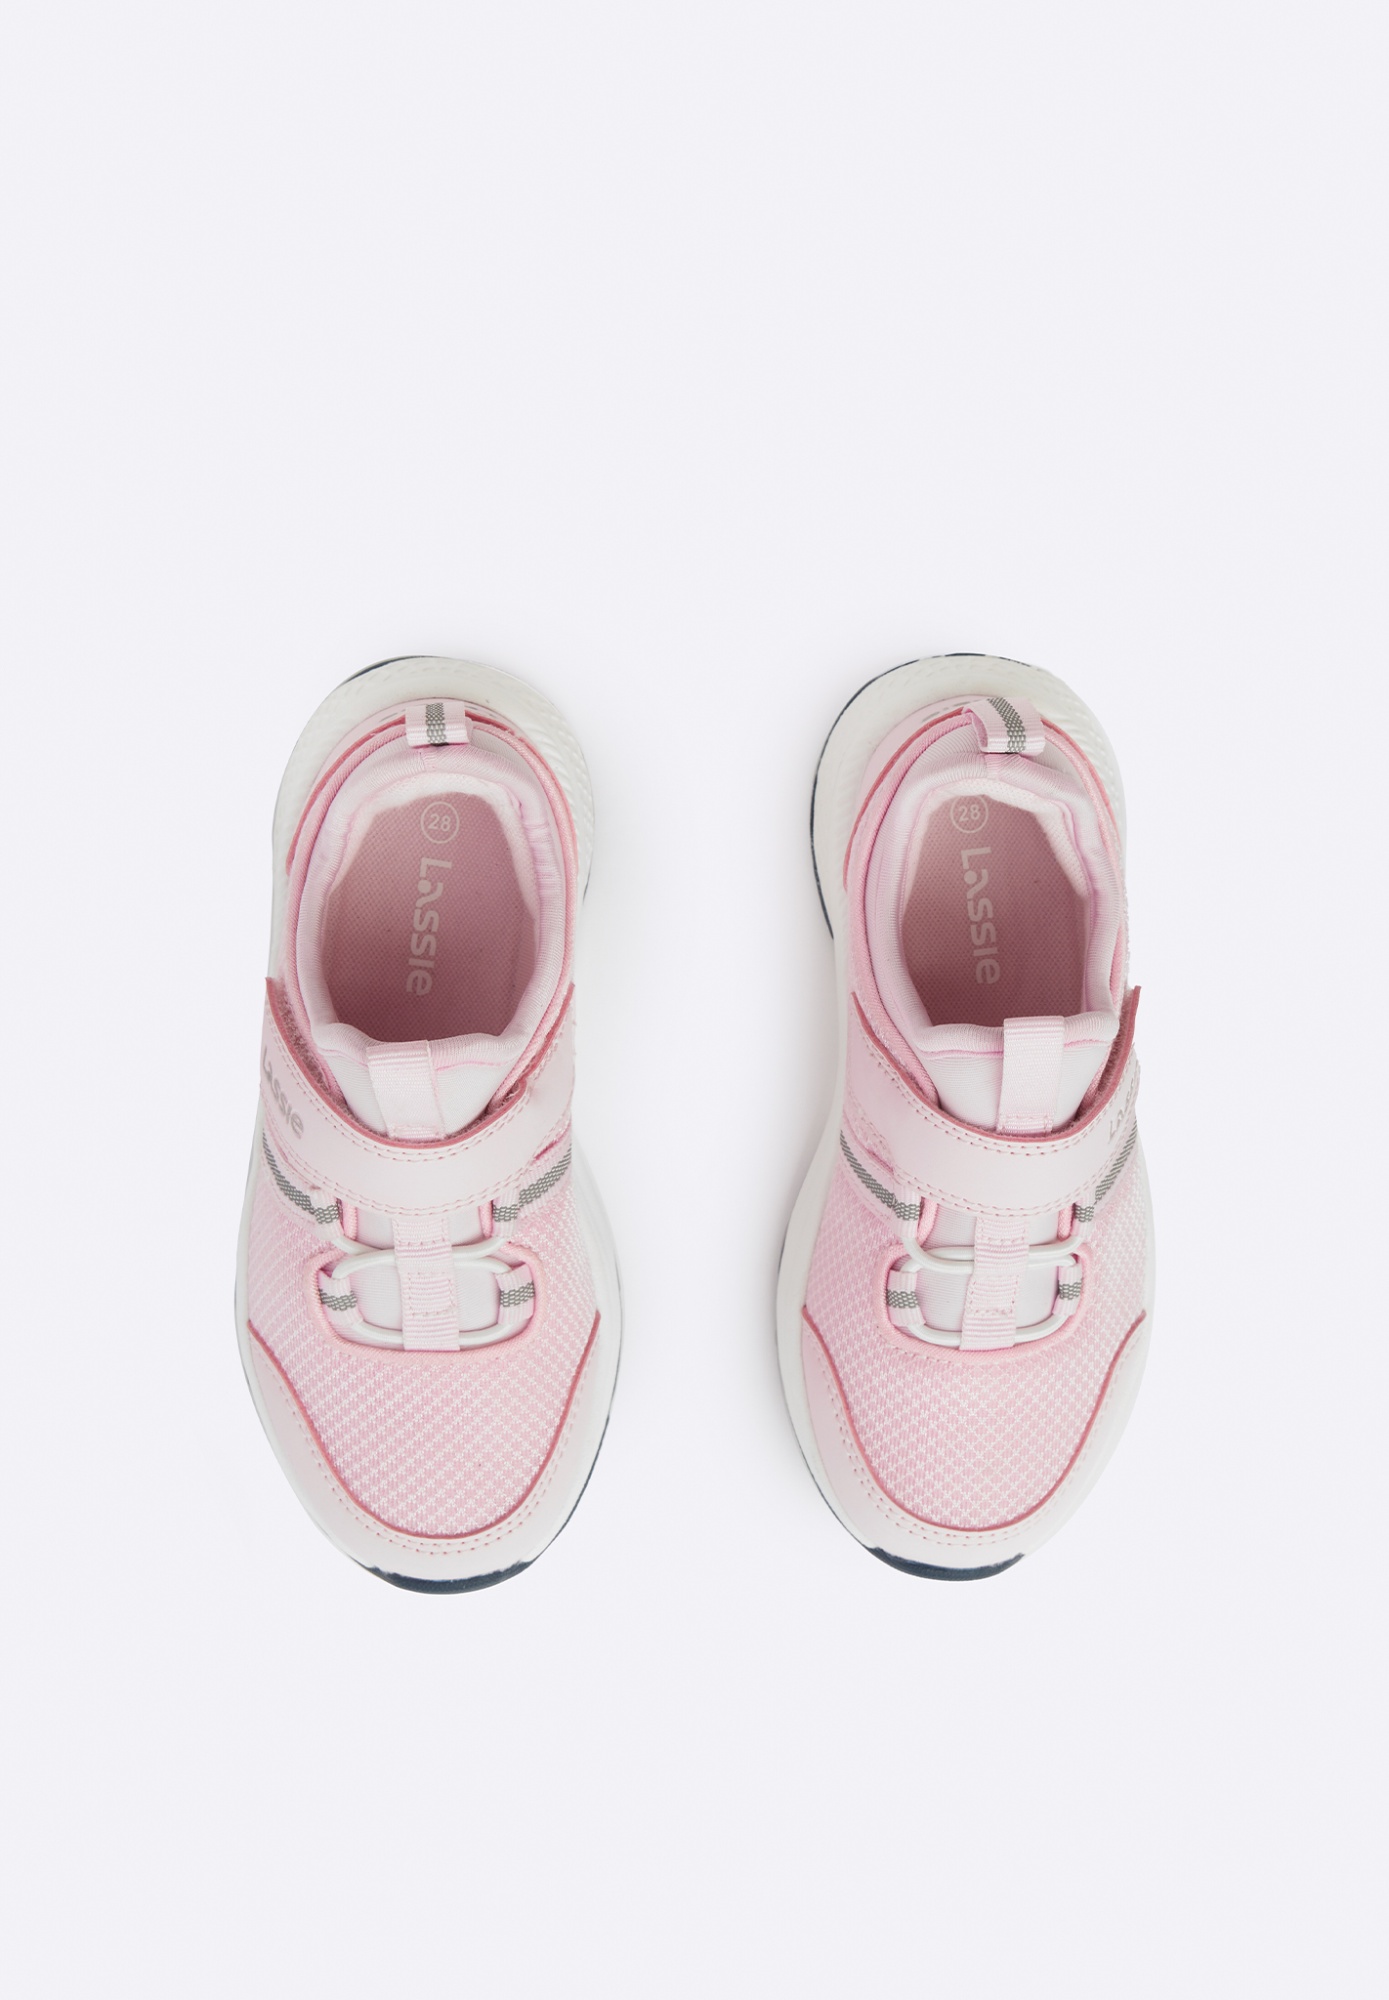 Детские кроссовки Lassie Luontuu T Розовые | фото